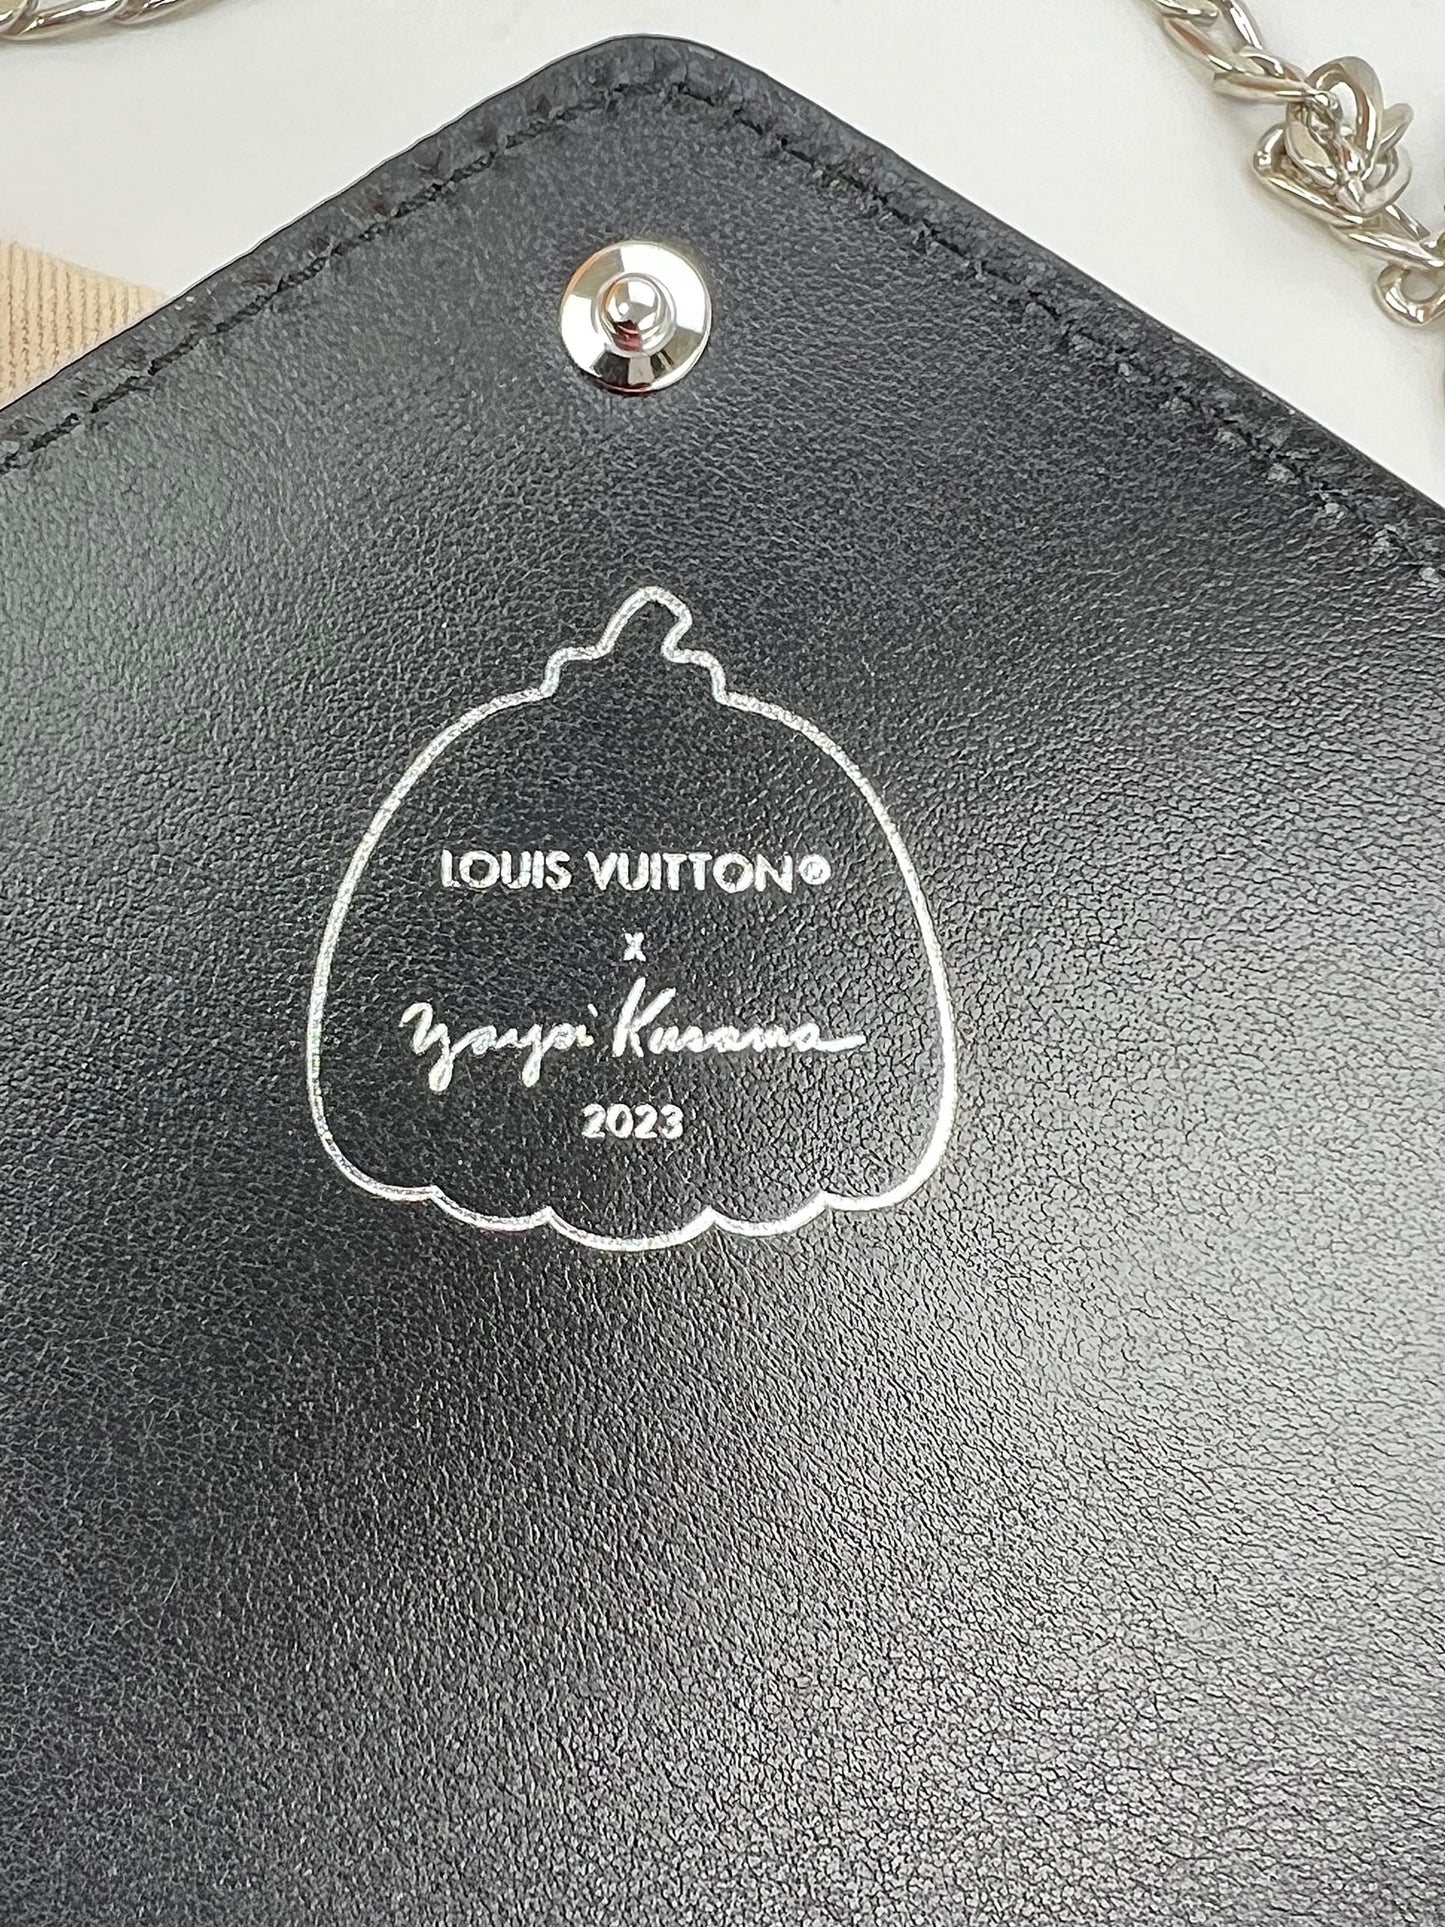 Louis Vuitton 3 Piece Pochette Kirigami w/ Tags